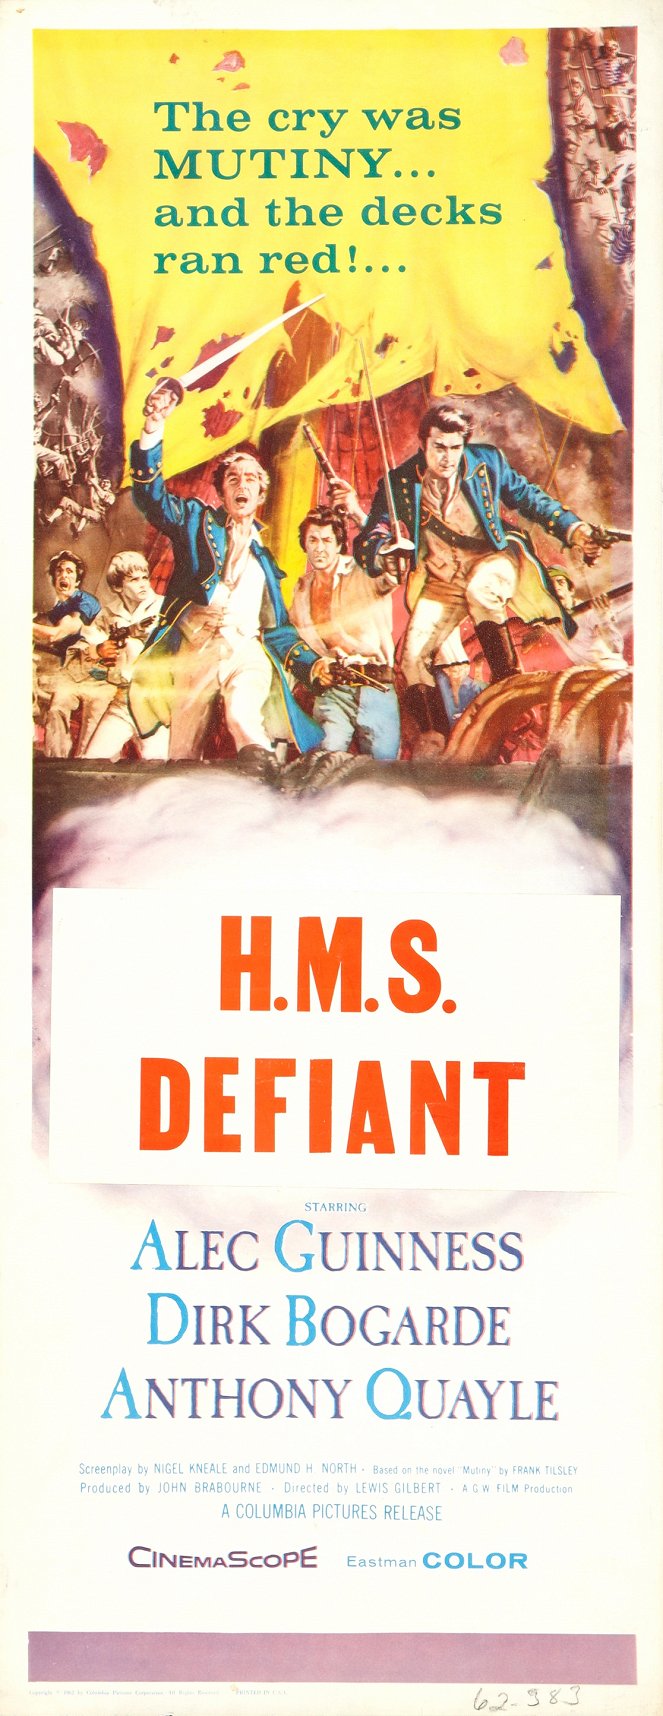 H.M.S. Defiant - Posters